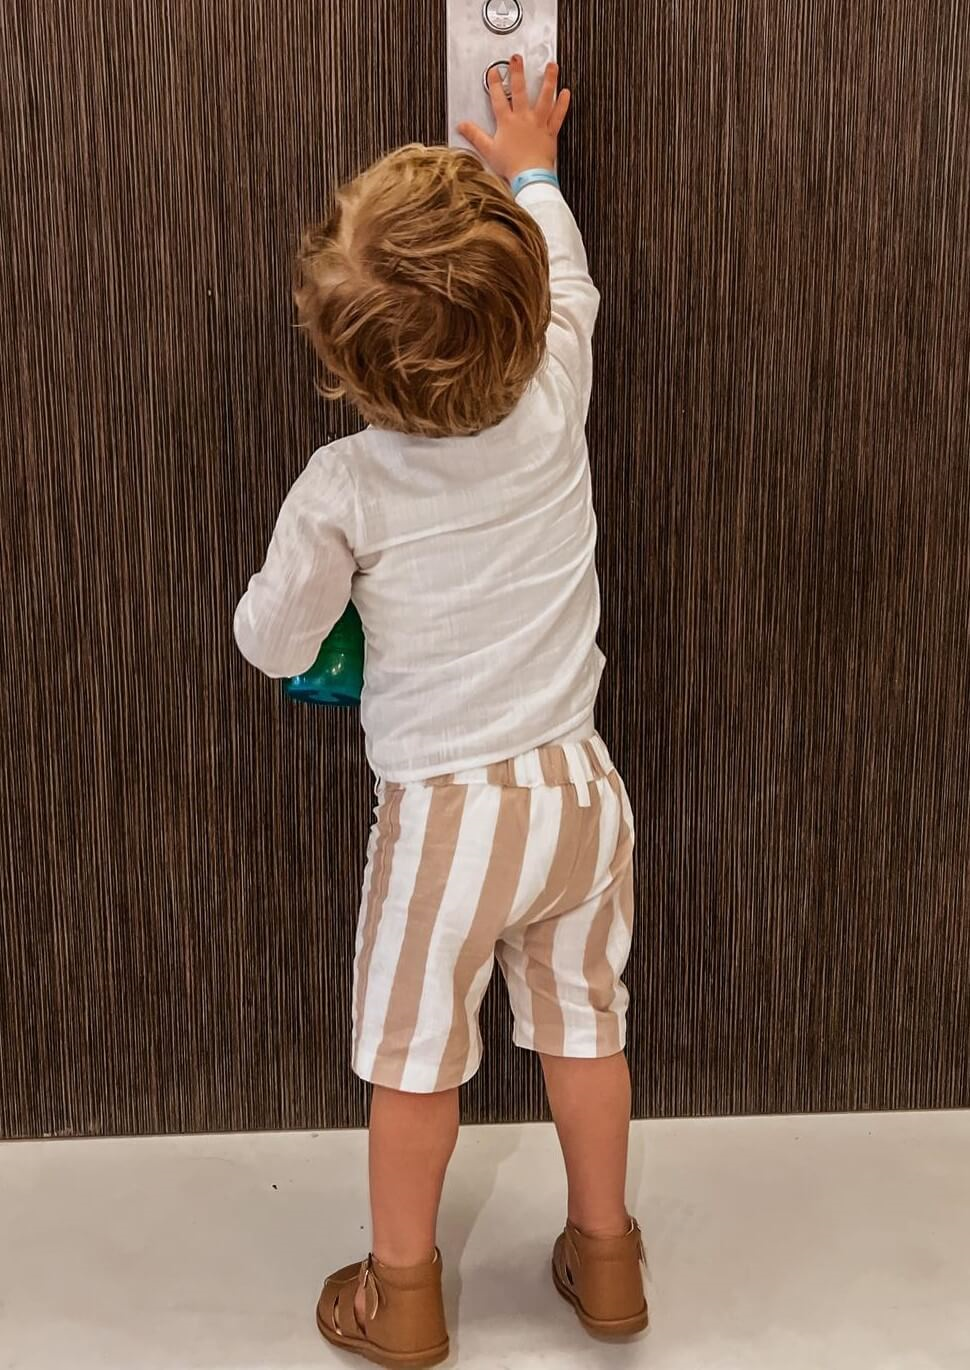 caramelo kids beige candy stripe shorts set modelled by tors childrens wear brand rep archer